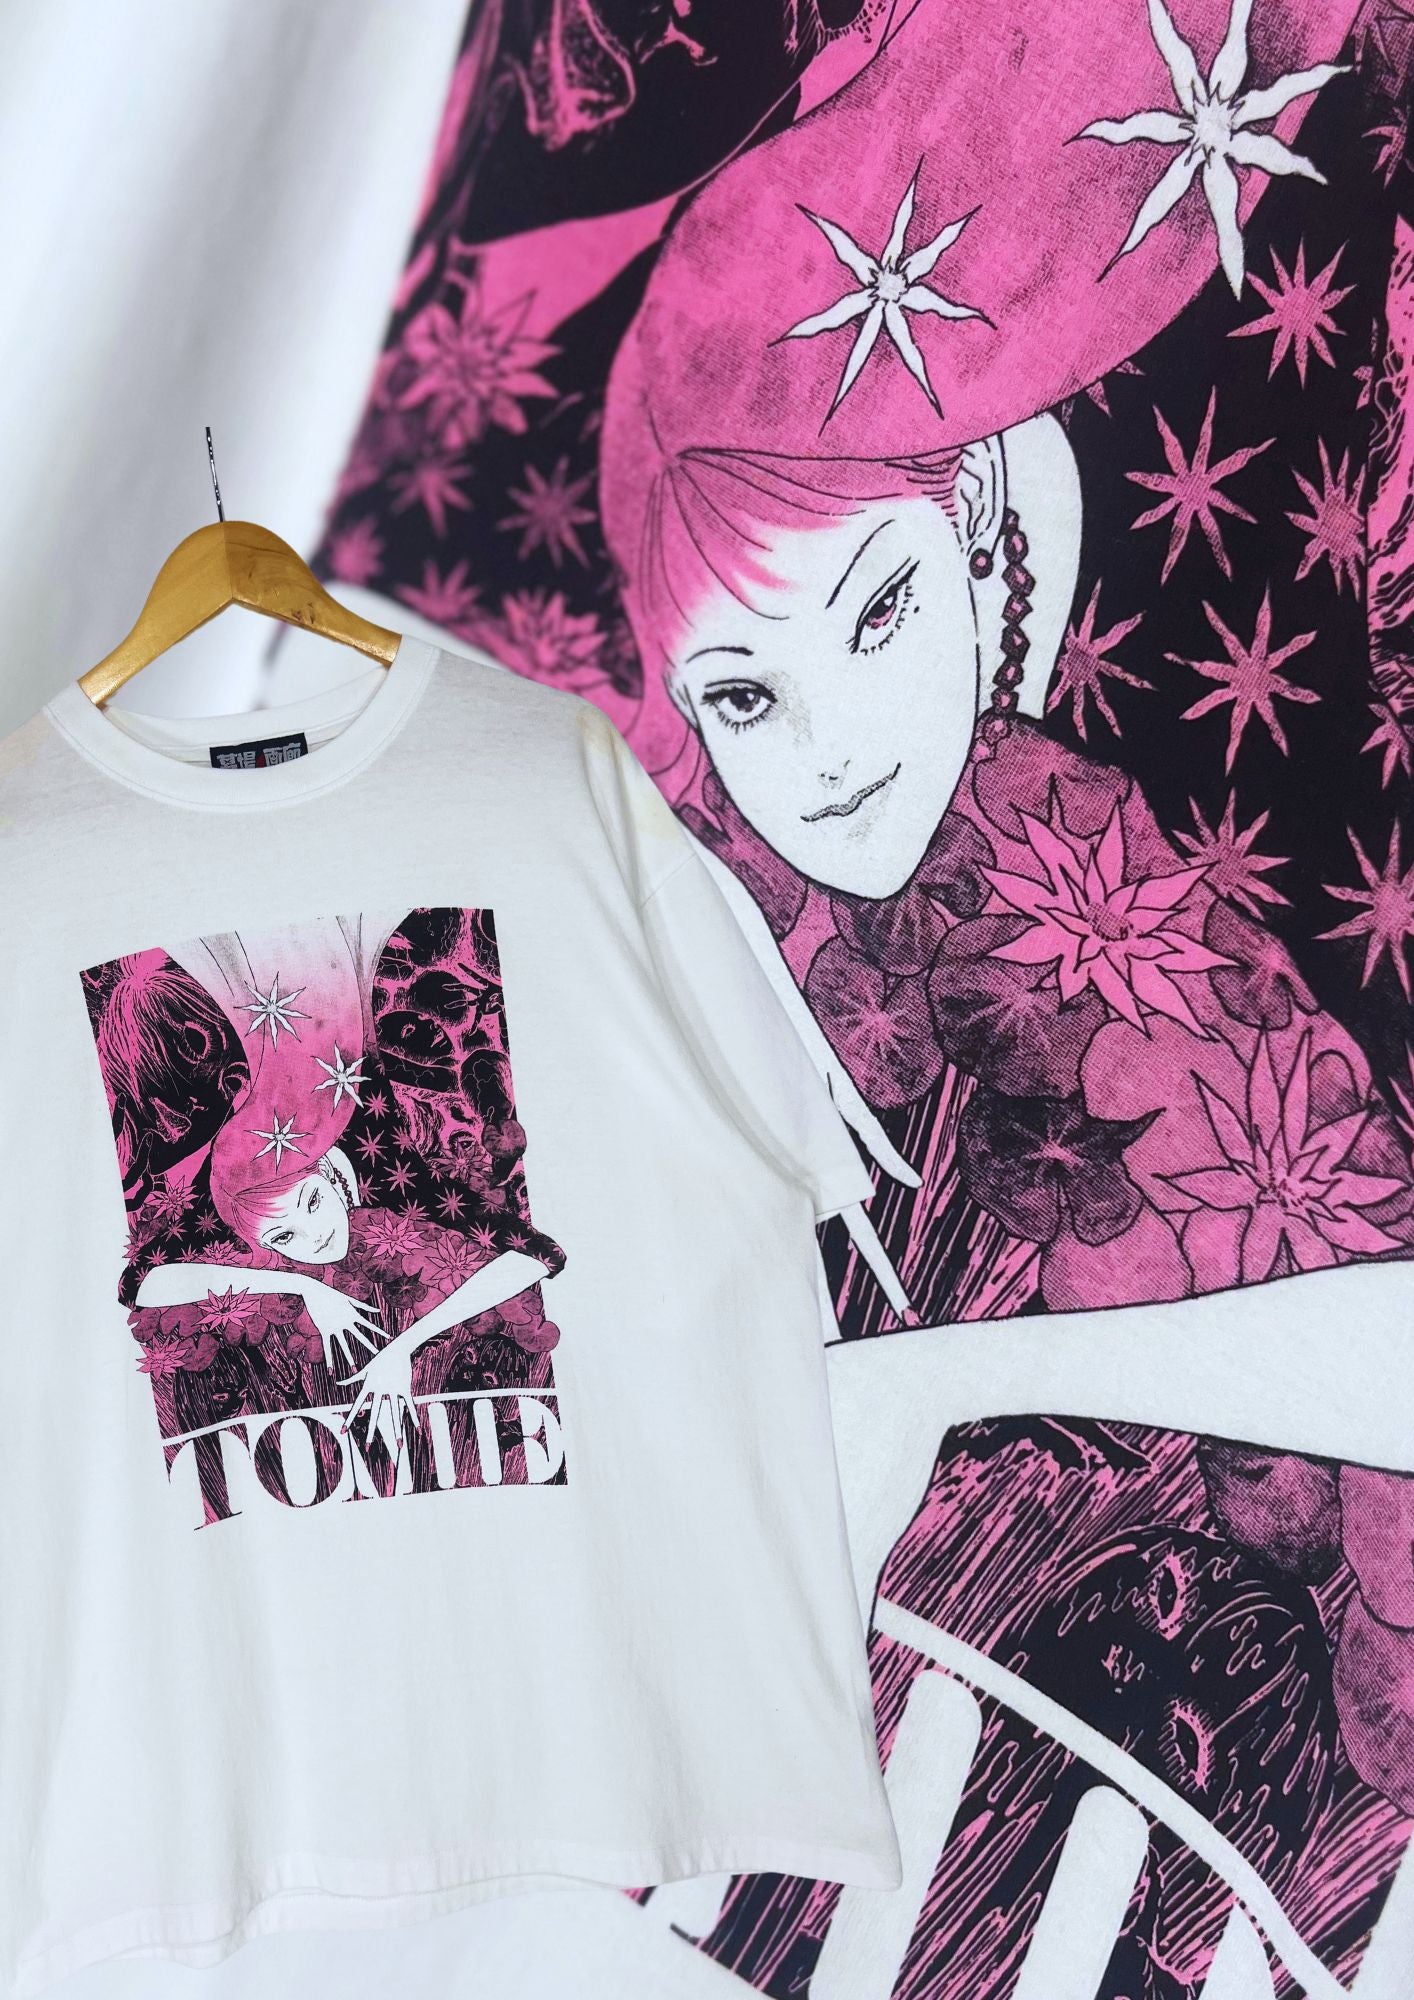 2023 Junji Ito 'Tomie' x Hakabagarou Tomie T-shirt